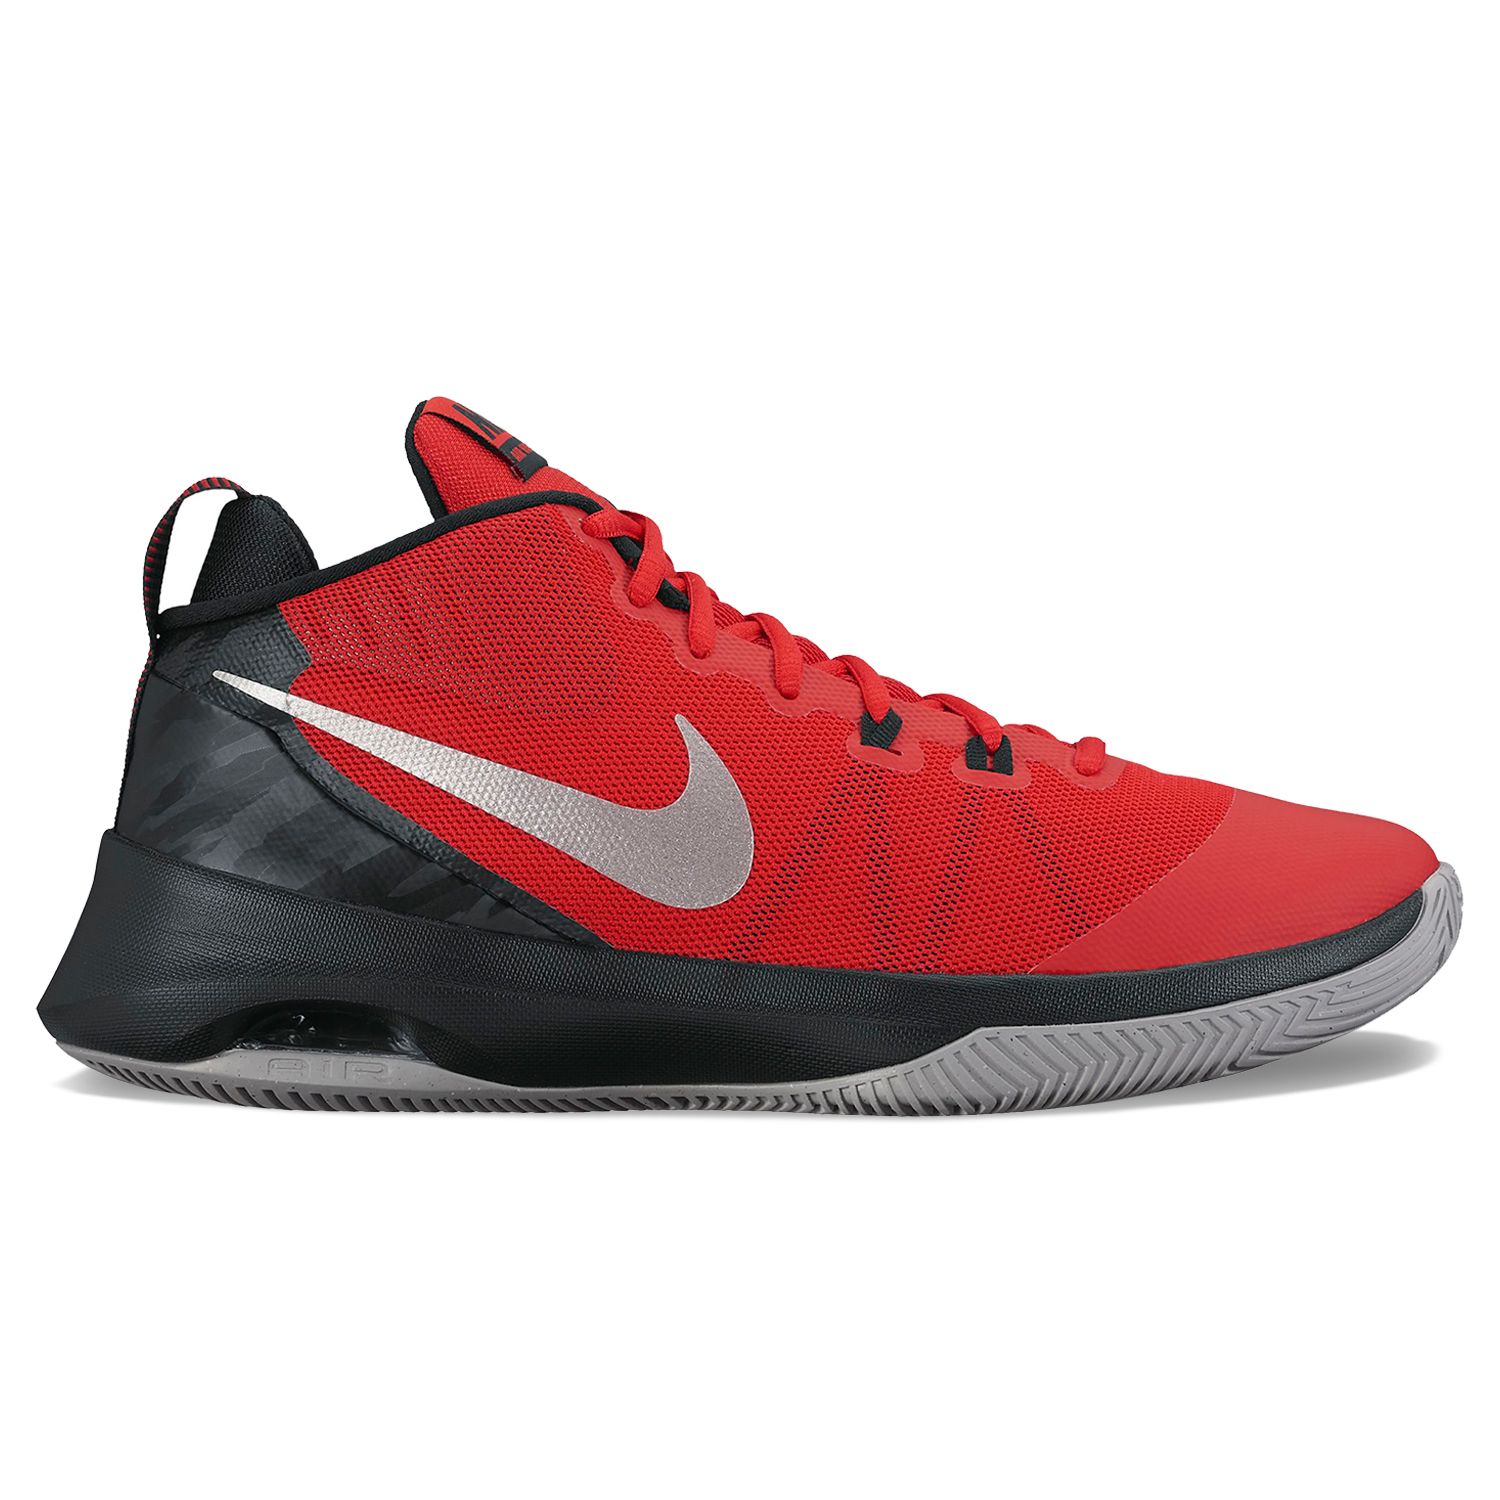 Nike Air Versitile Men's Basketball Shoes